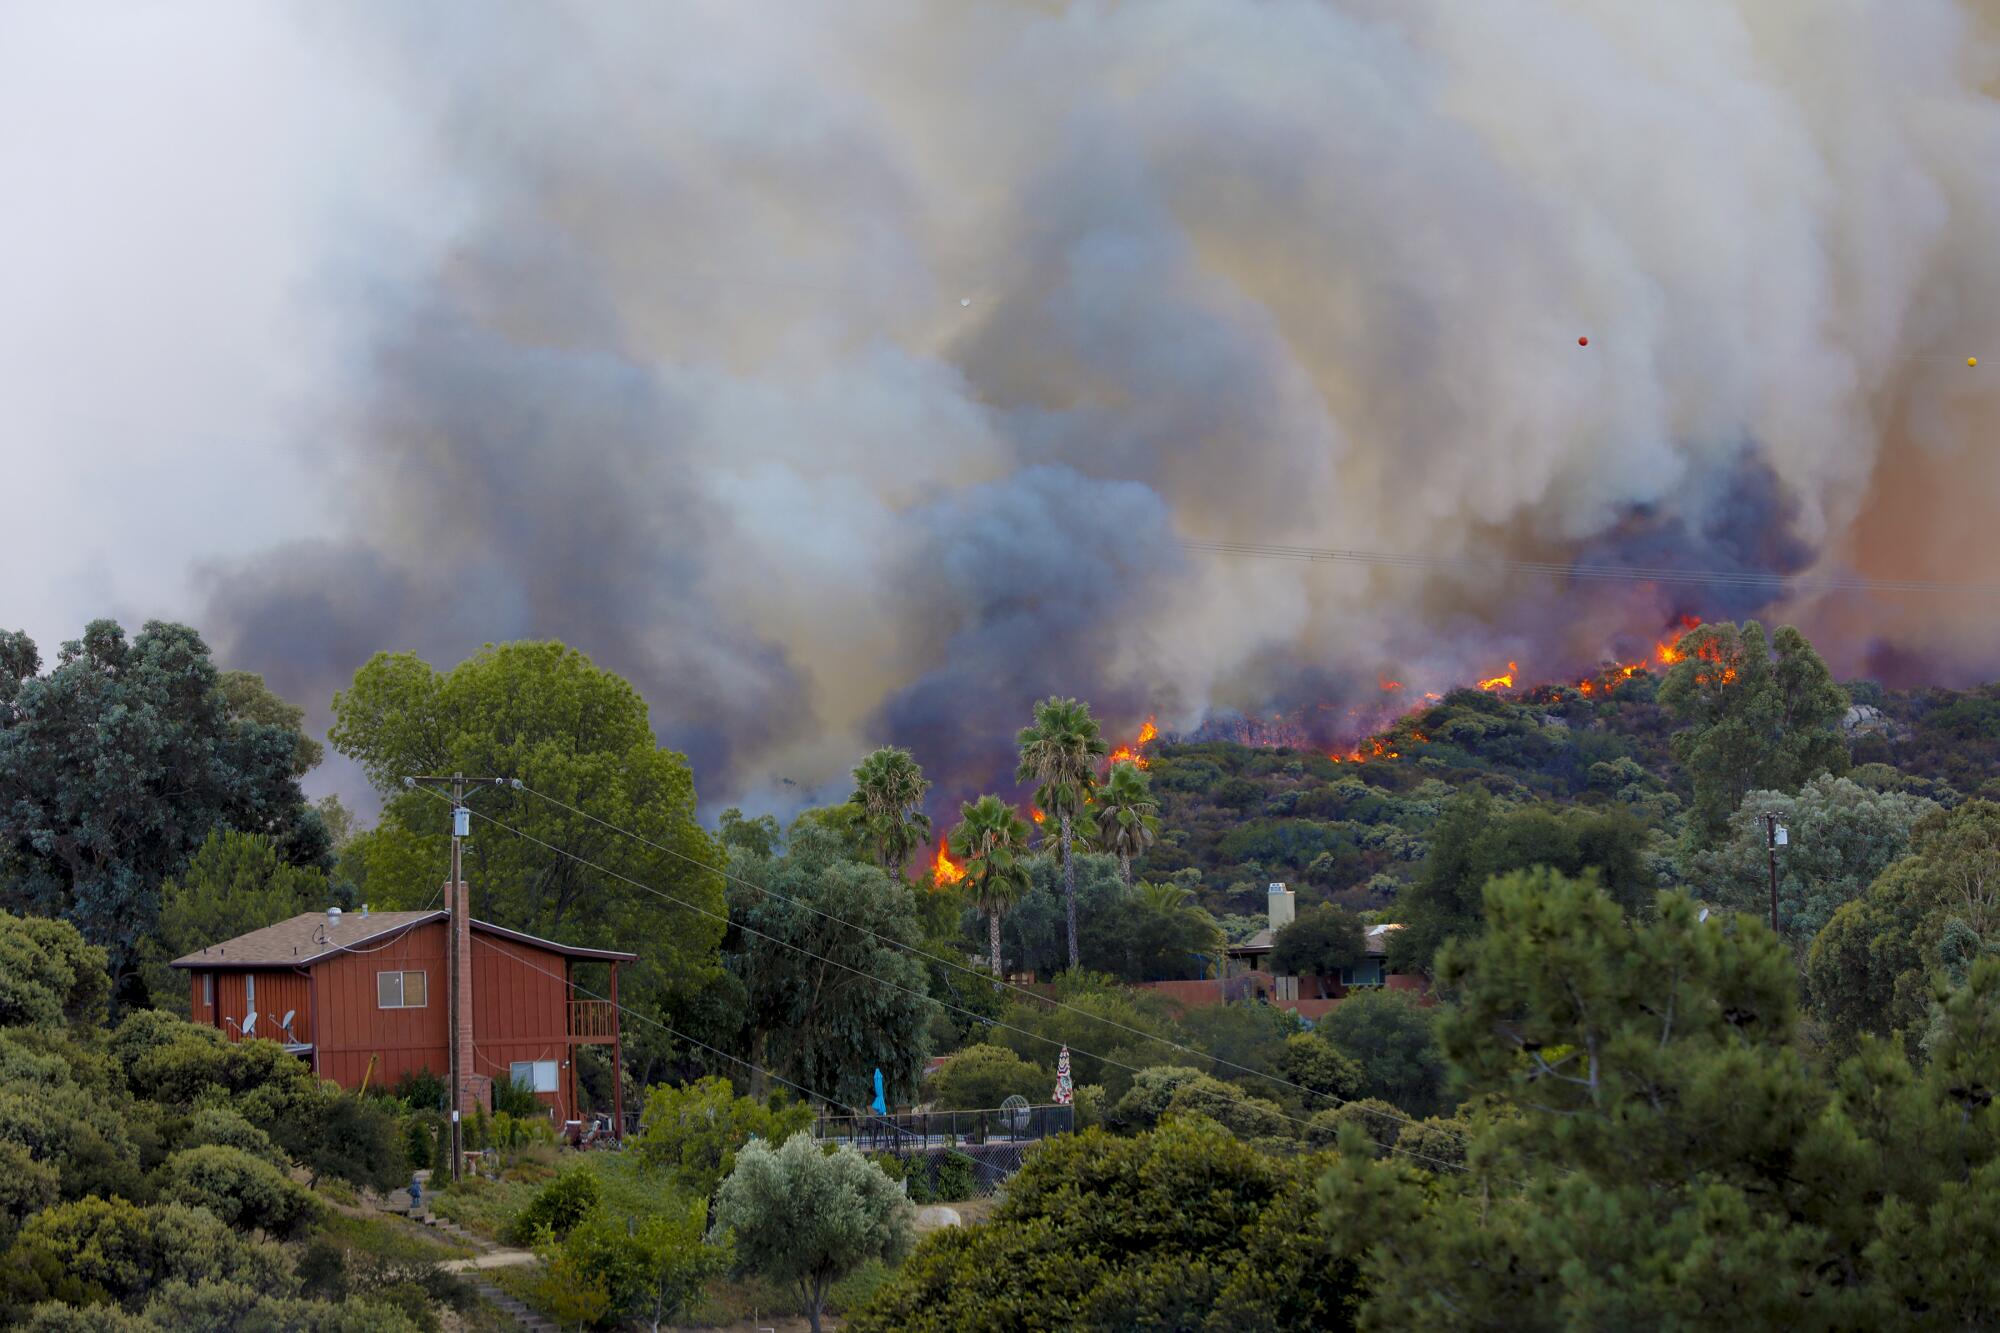 A wildfire burns near a home.